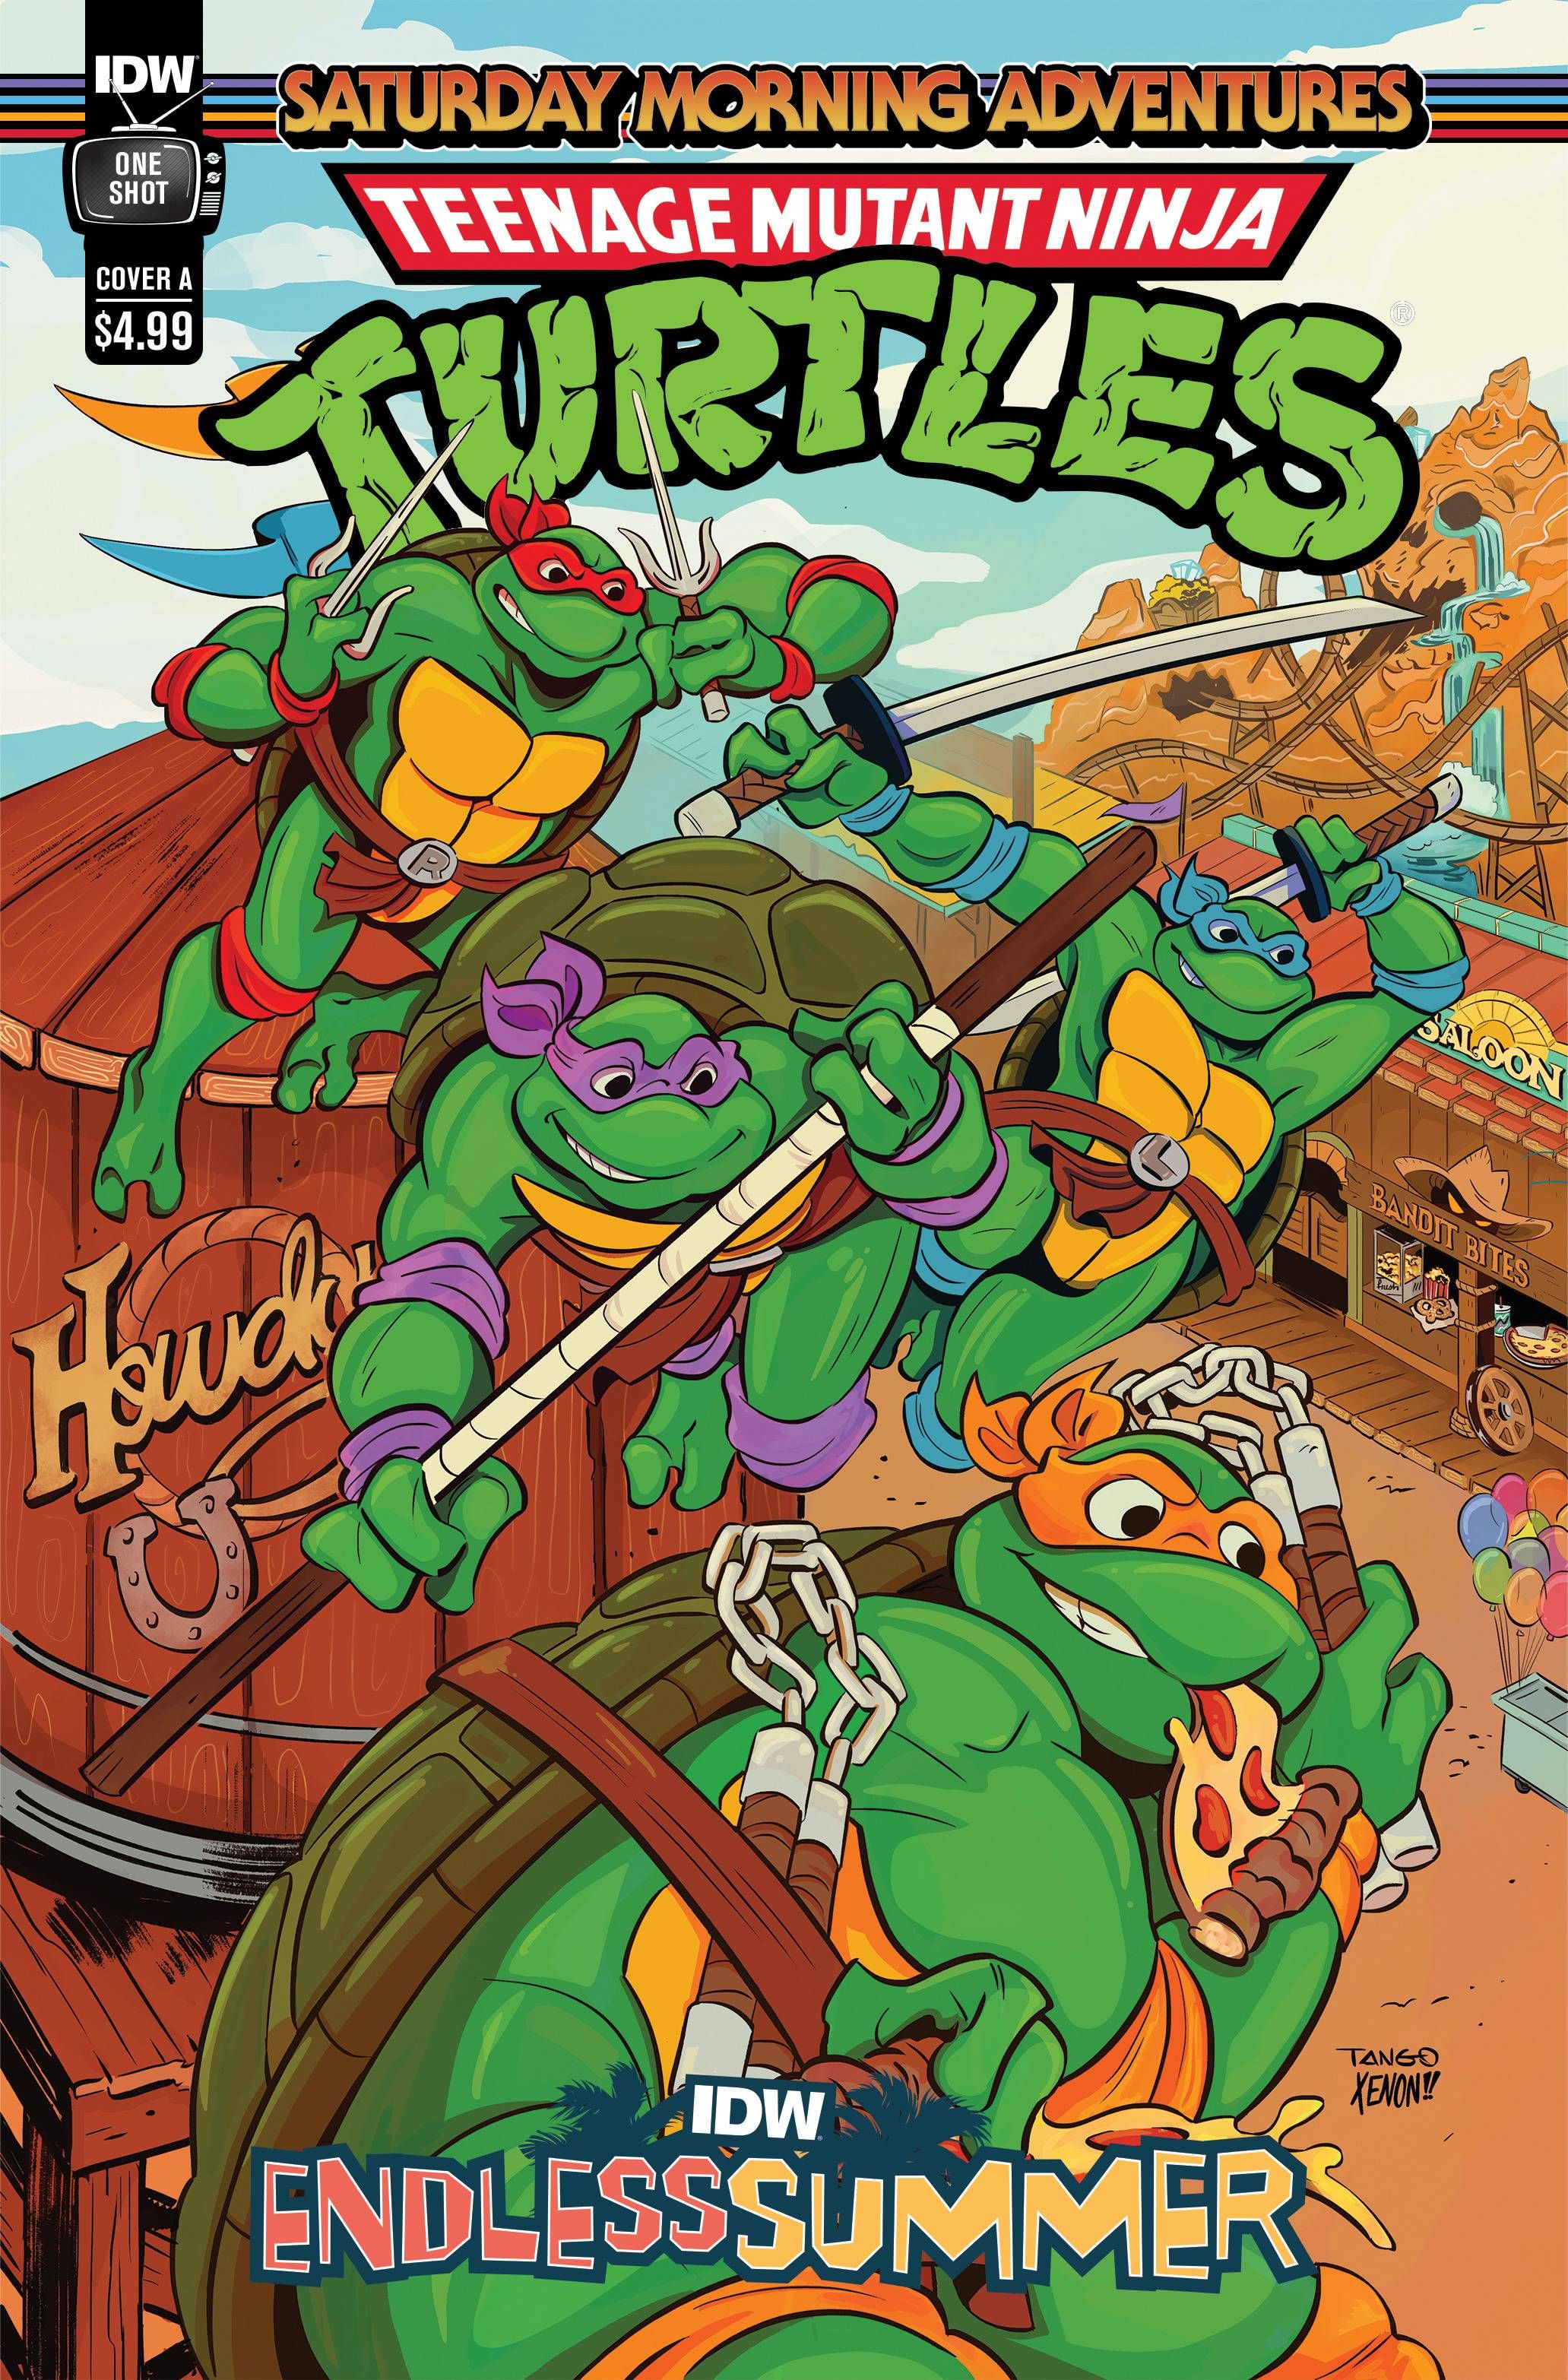 IDW Endless Summer: Teenage Mutant Ninja Turtles Saturday Morning Adventures Comic